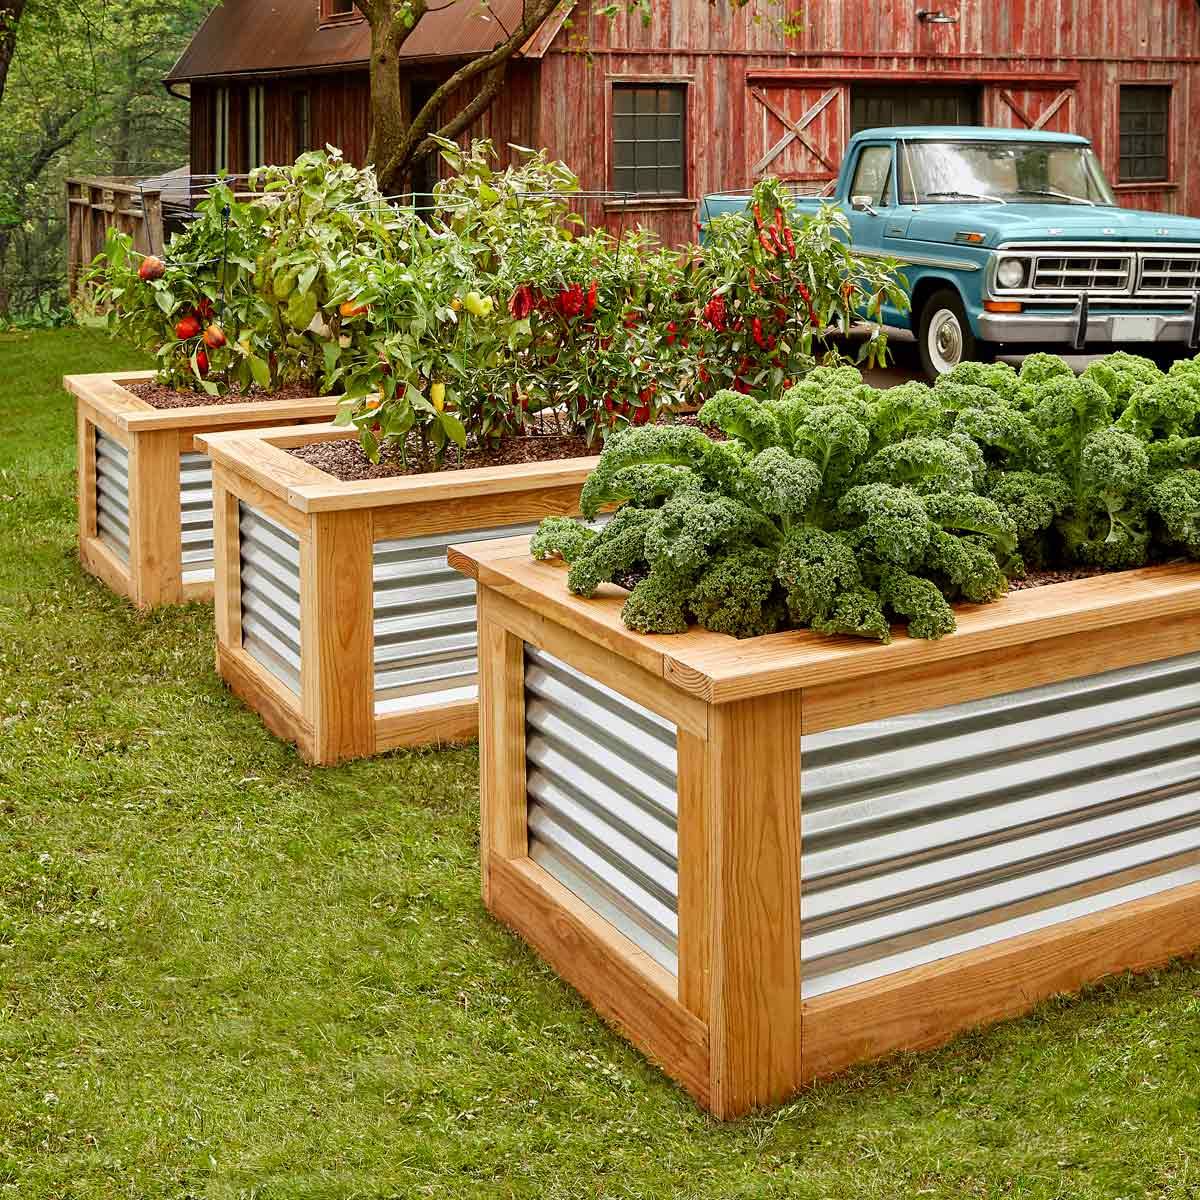 Easy Diy Raised Garden Bed Ideas And Plans Grow Gardener Blog